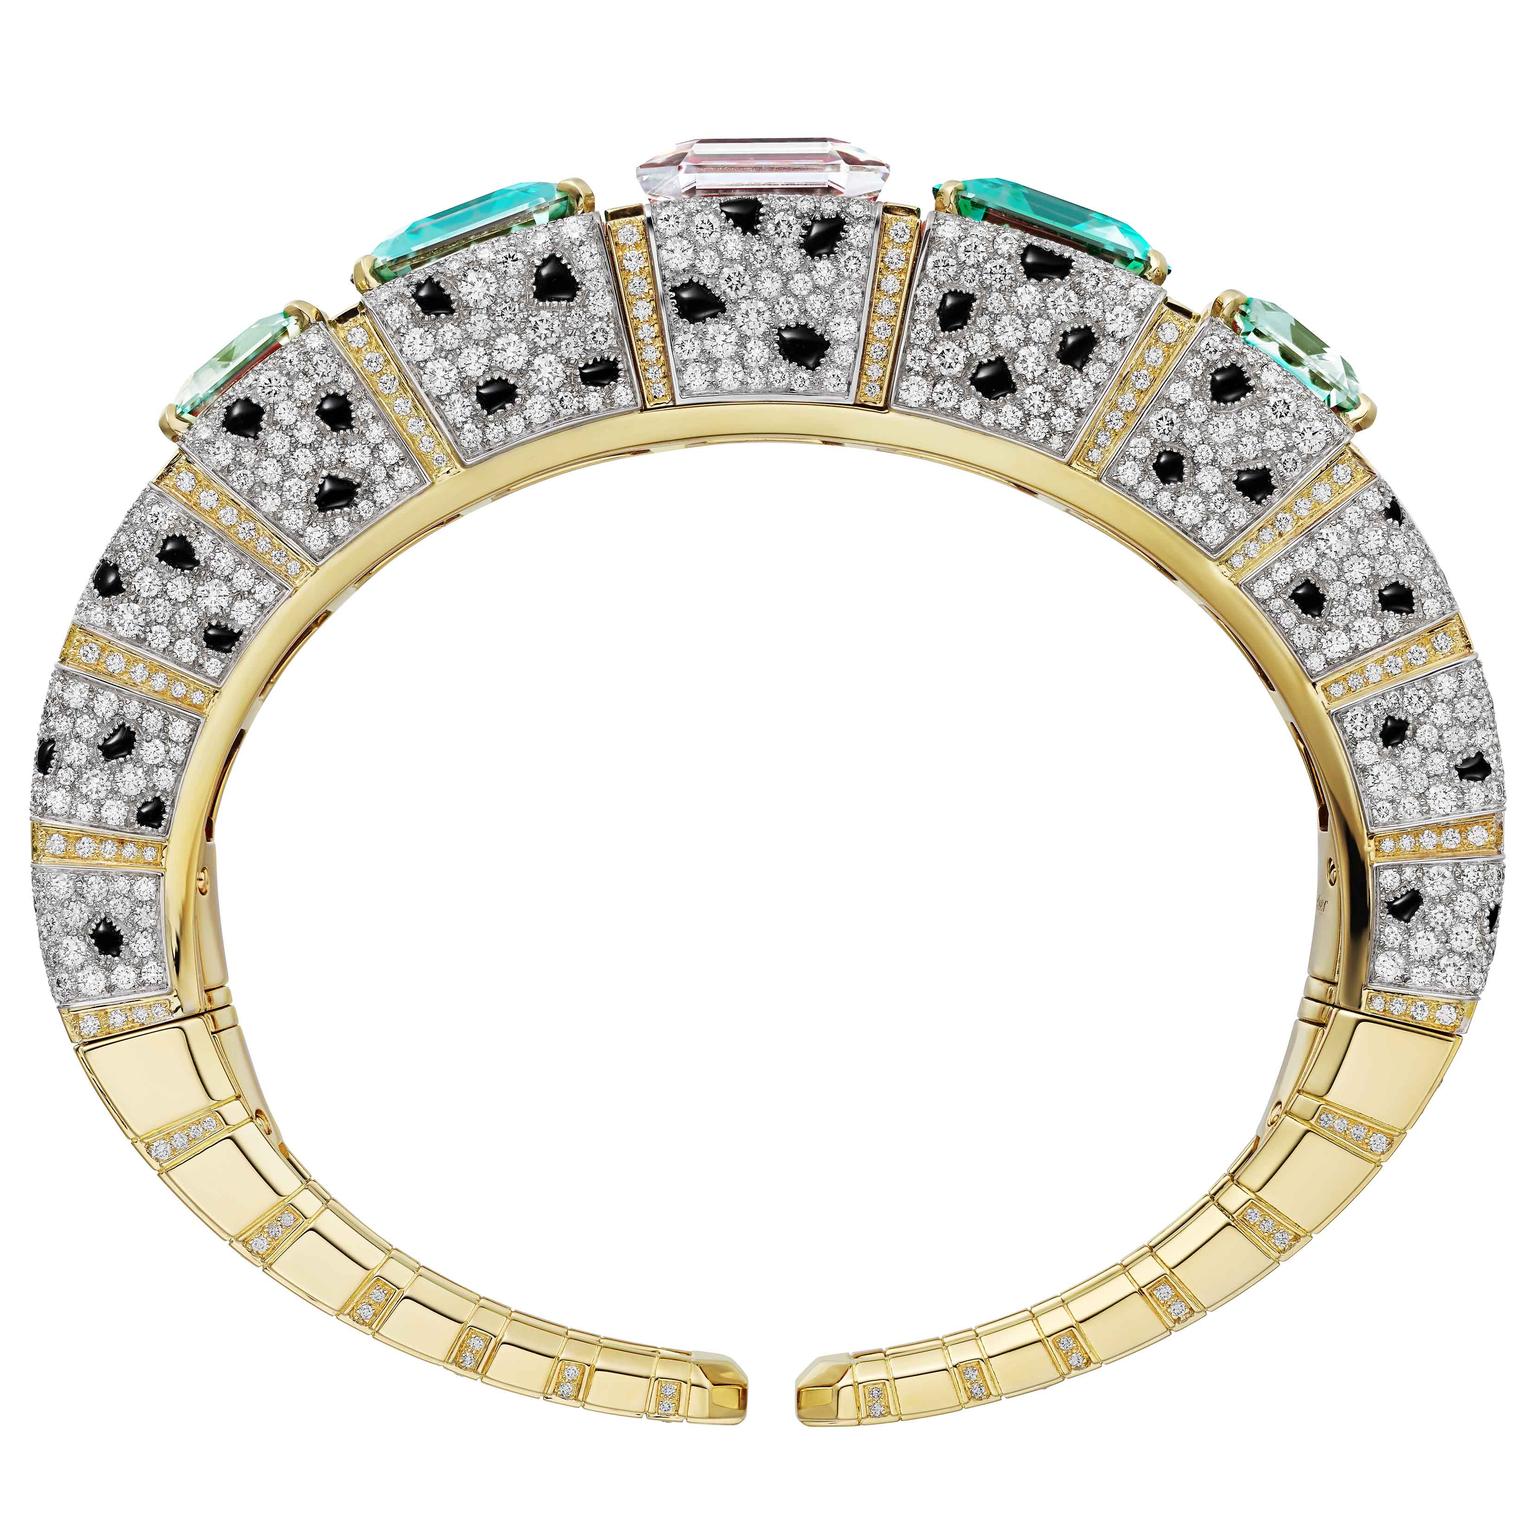 Cartier high jewellery bracelet